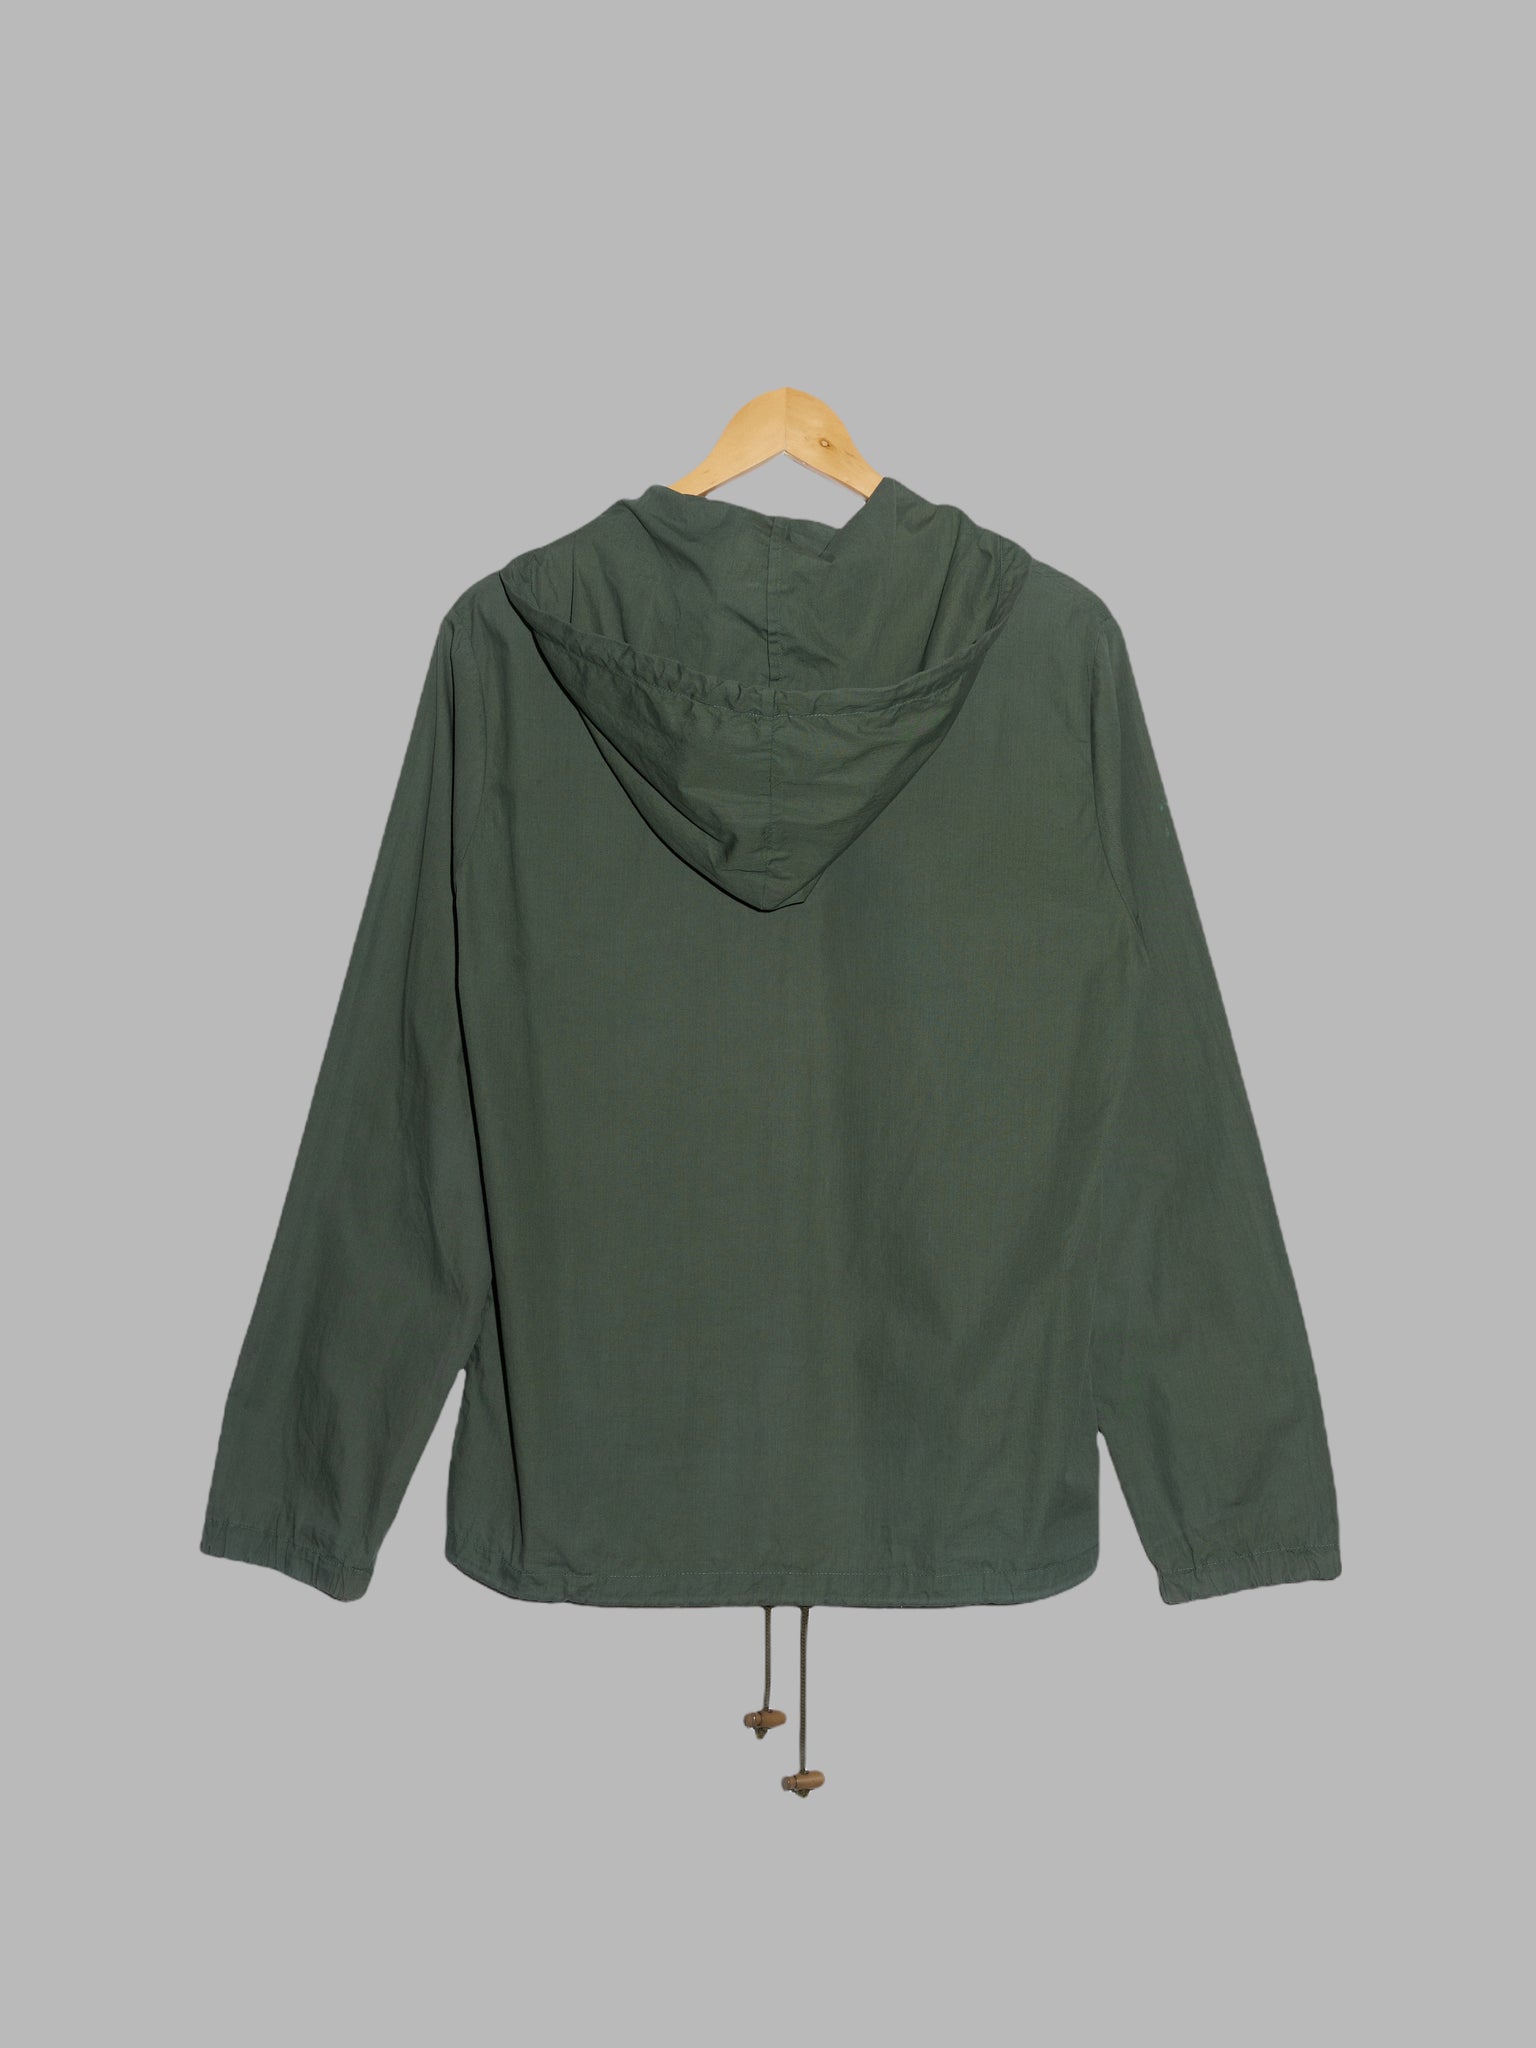 Jean Colonna khaki cotton hooded pullover windbreaker - size 46